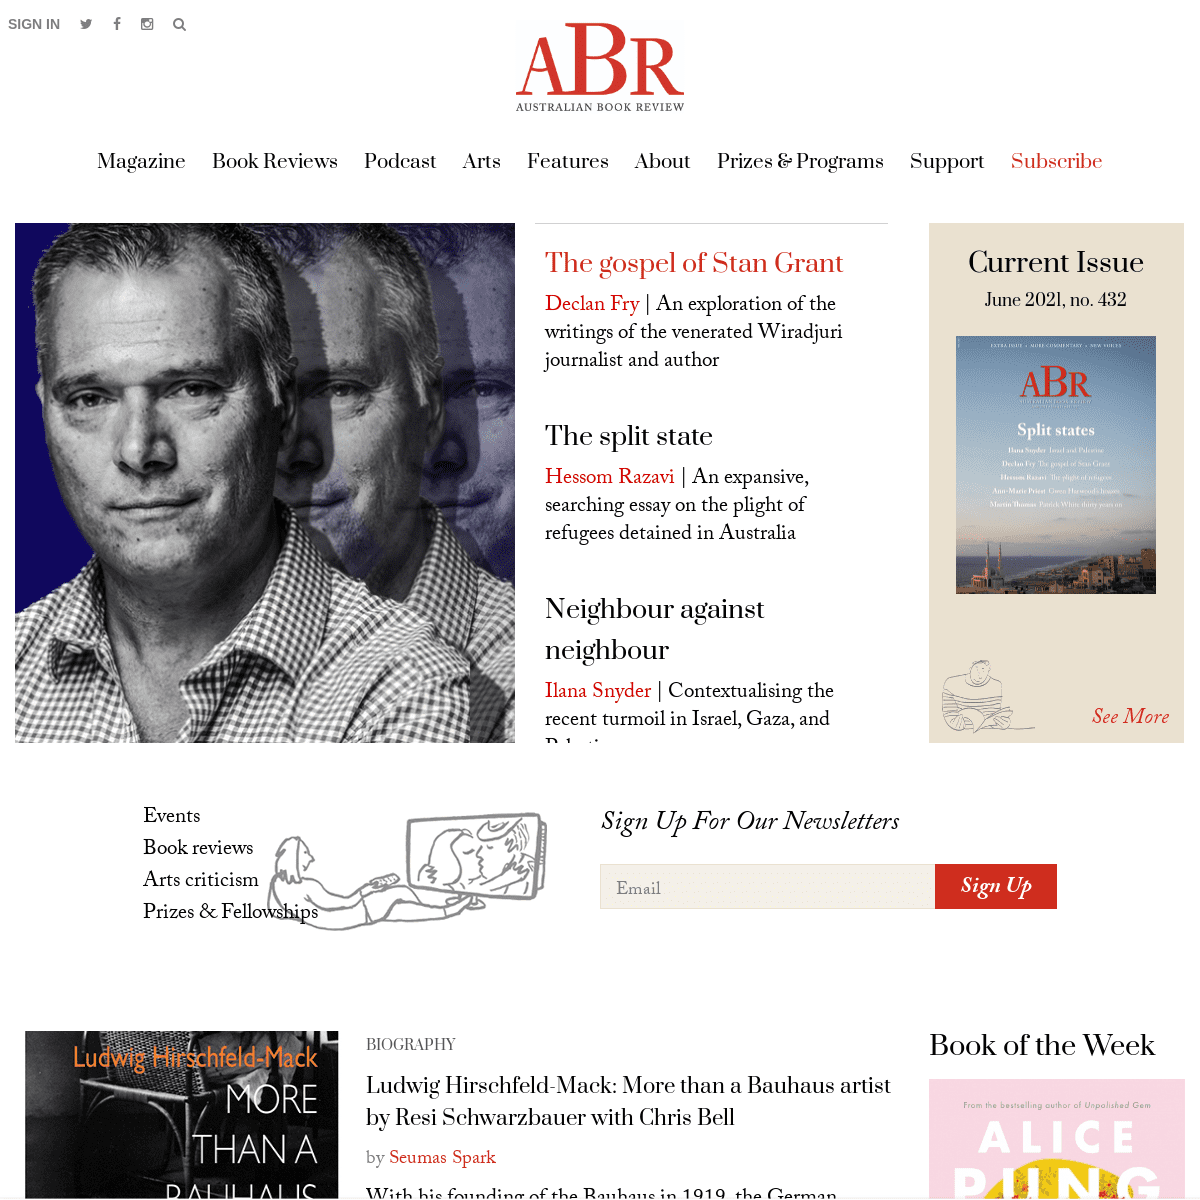 A complete backup of https://australianbookreview.com.au